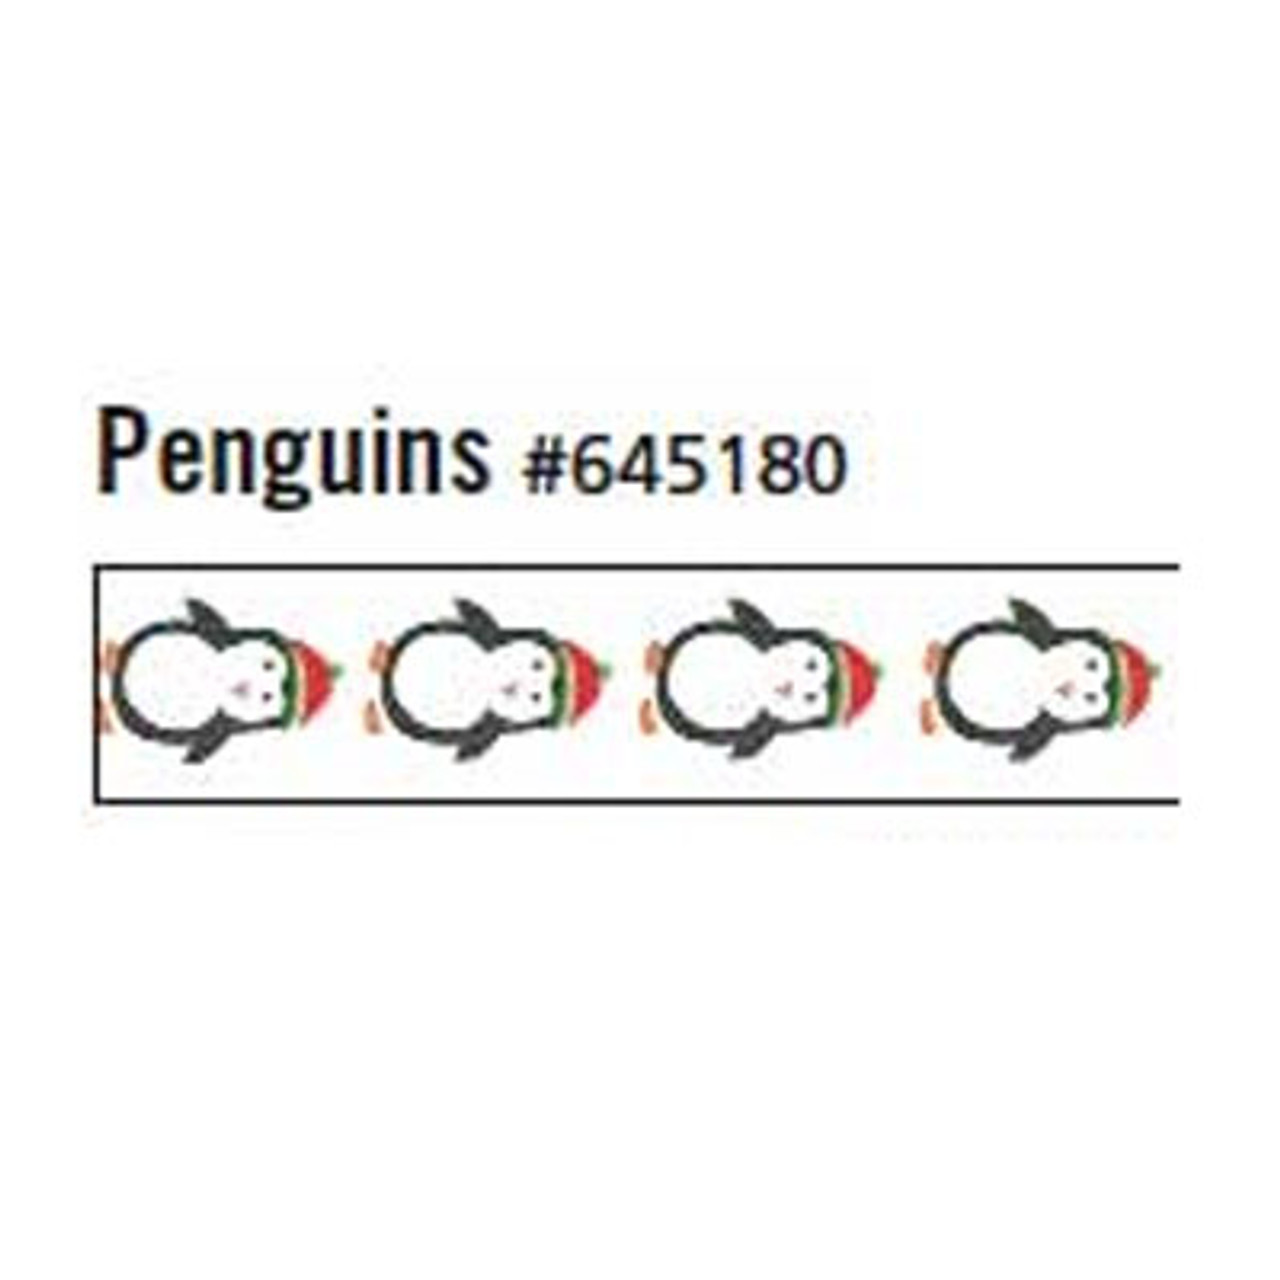 Penguins Printed Curling Ribbon 3/8" x 250 yd.